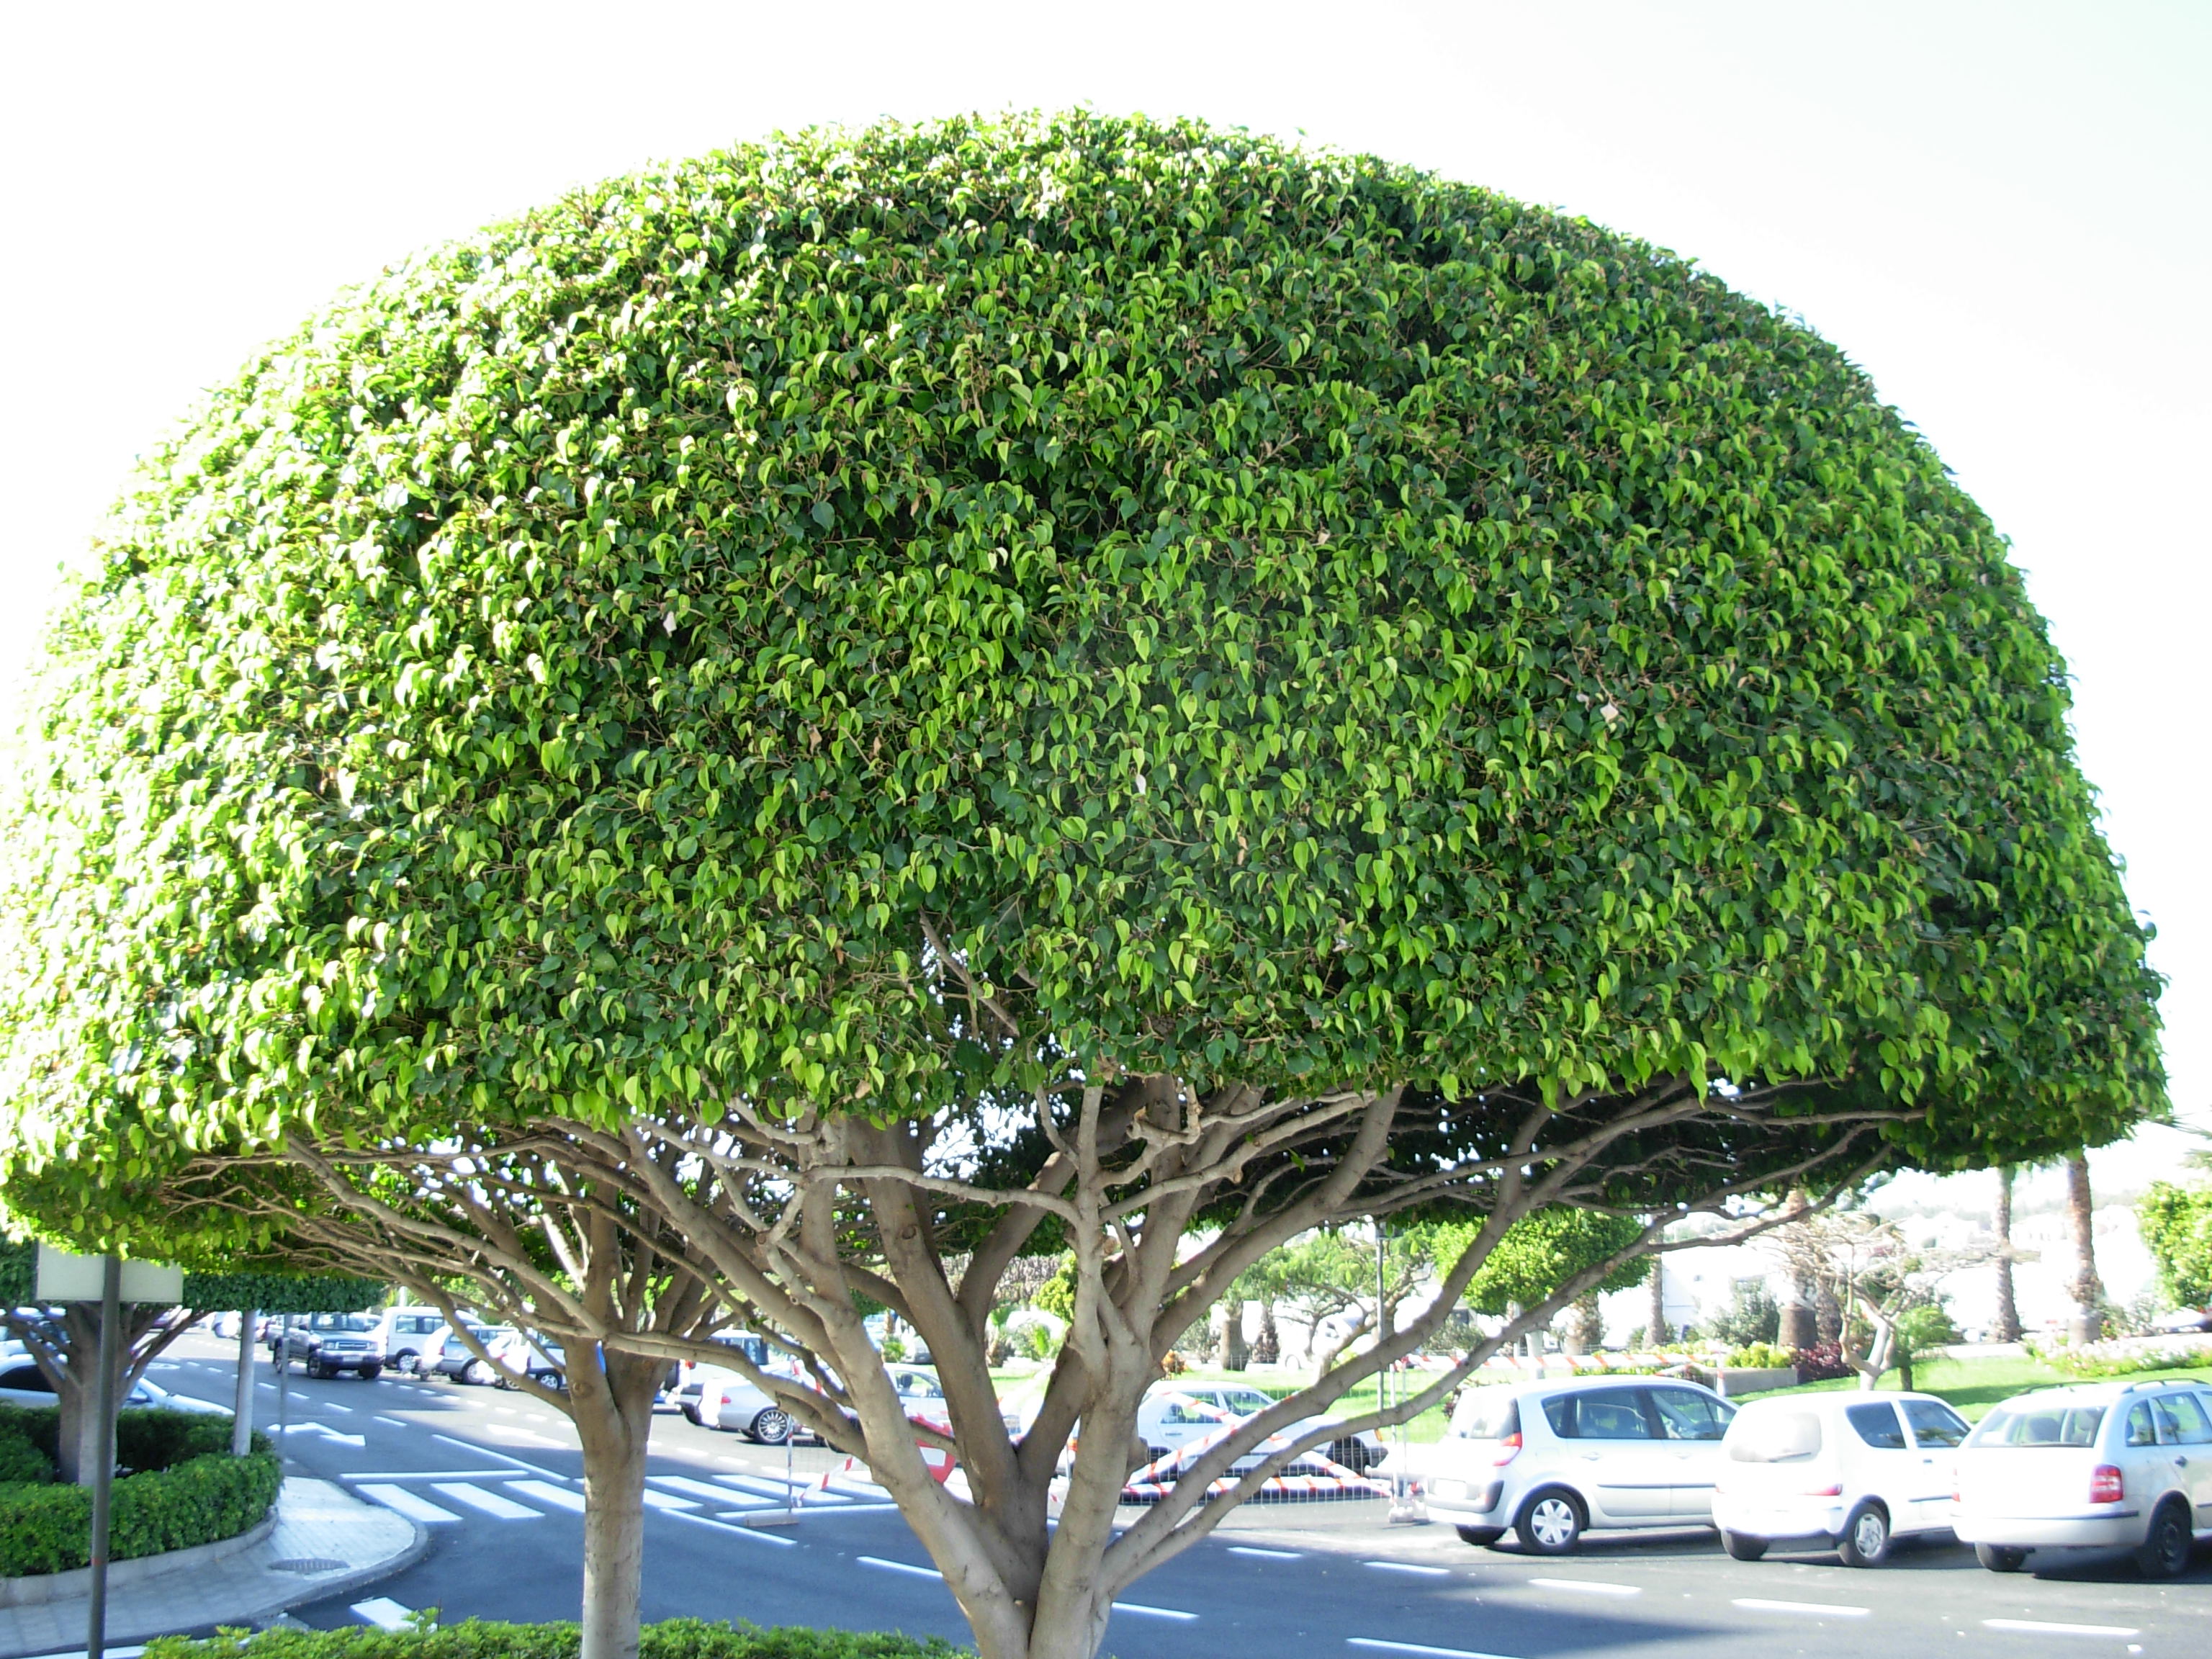 File:Shaped tree Tenerife.JPG - Wikimedia Commons